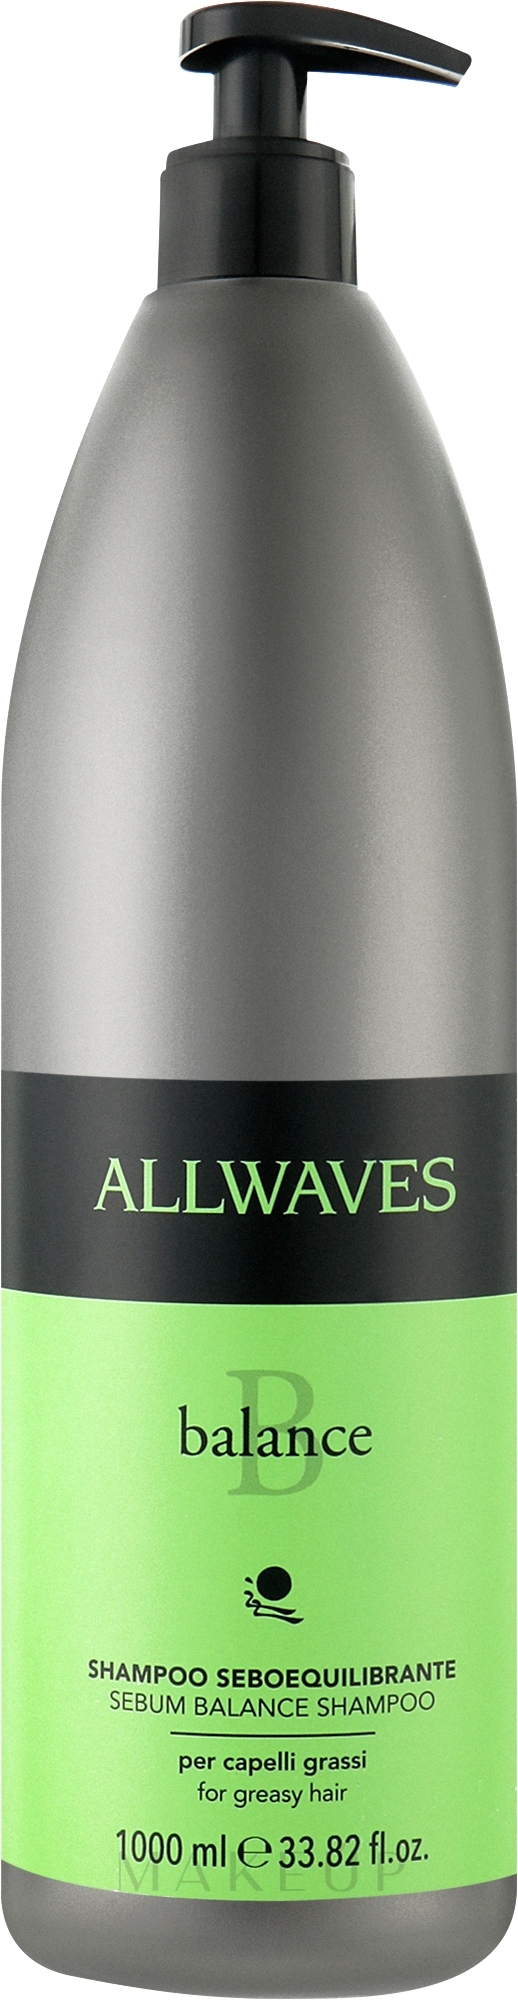 Regulierendes Shampoo für fettiges Haar mit Brennnesselextrakt - Allwaves Balance Sebum Balancing Shampoo — Foto 1000 ml